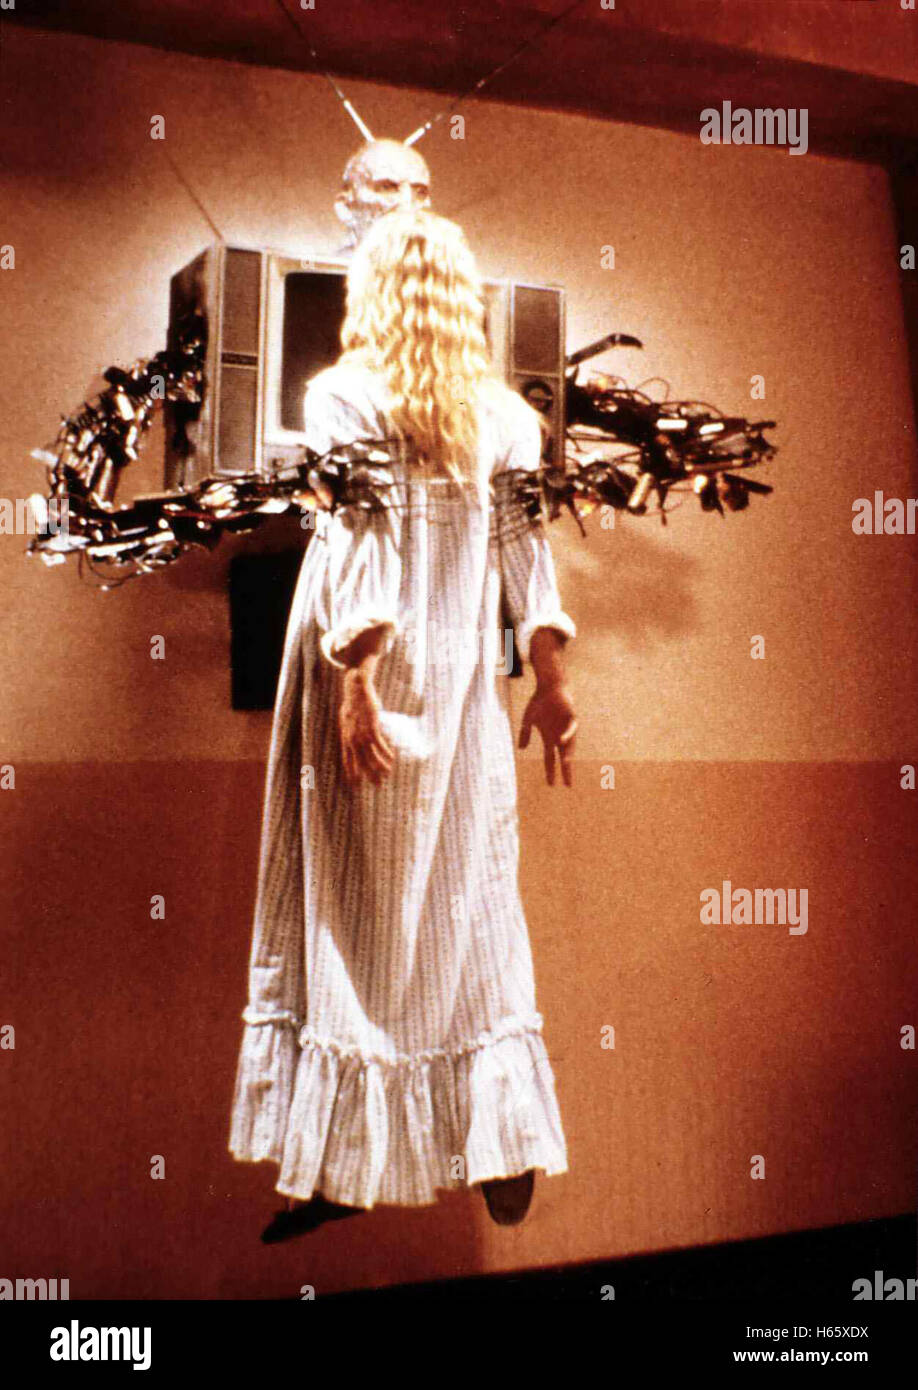 Nightmare - Mörderische Träume,USA 1984 aka. A Nightmare on Elm Street, Director: Wes Craven, Actors/Stars: Heather Langenkamp, Johnny Depp, Robert Englund Stock Photo